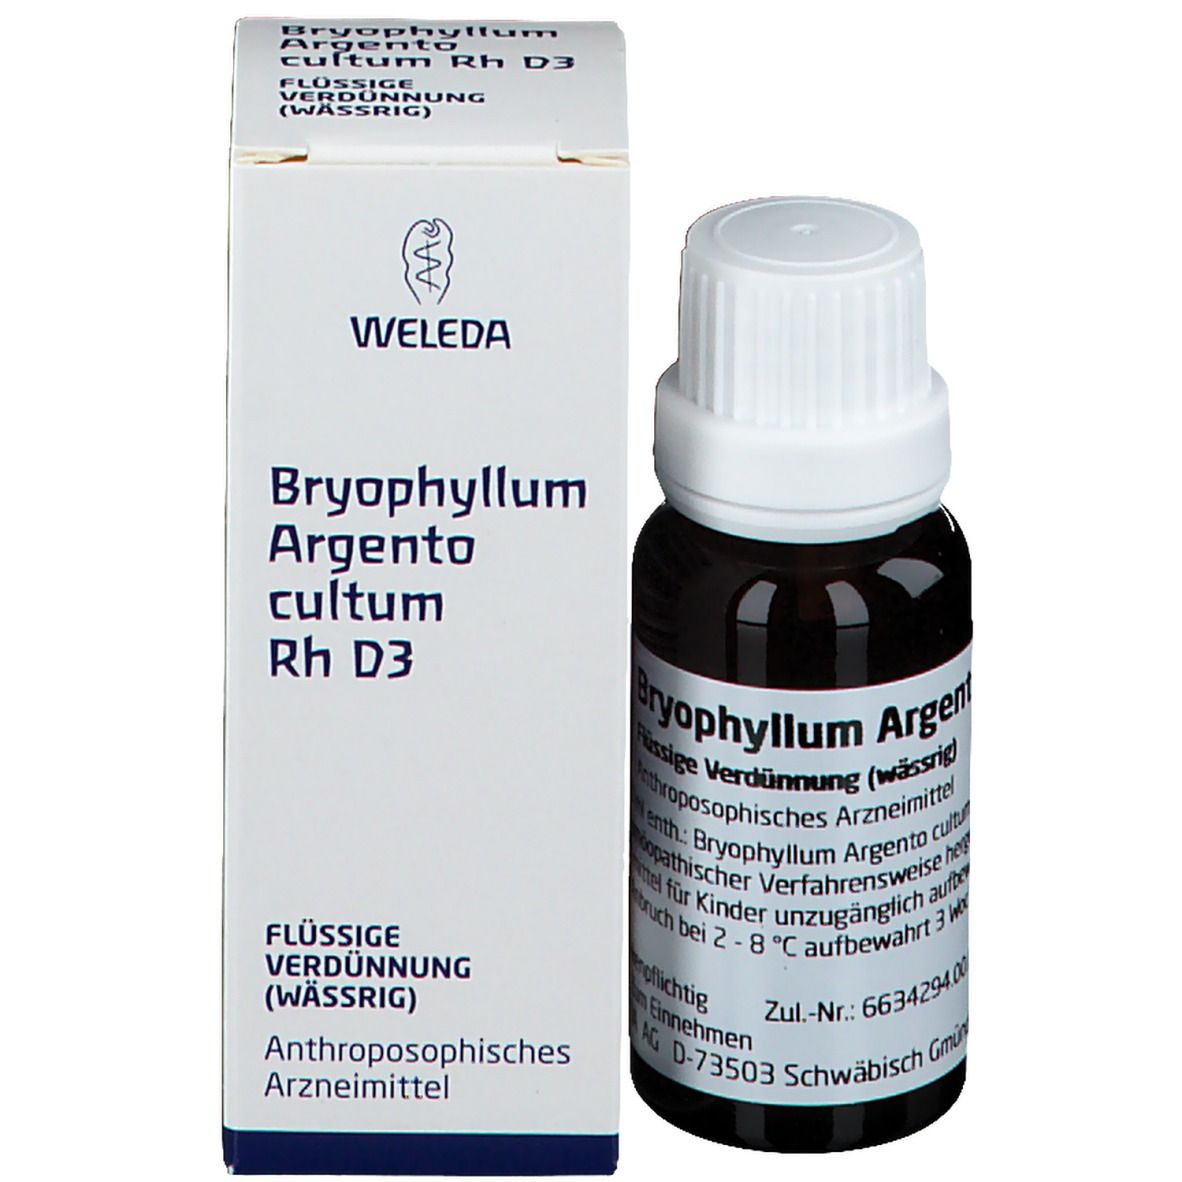 Byophyllum Argento cultum Rh D3